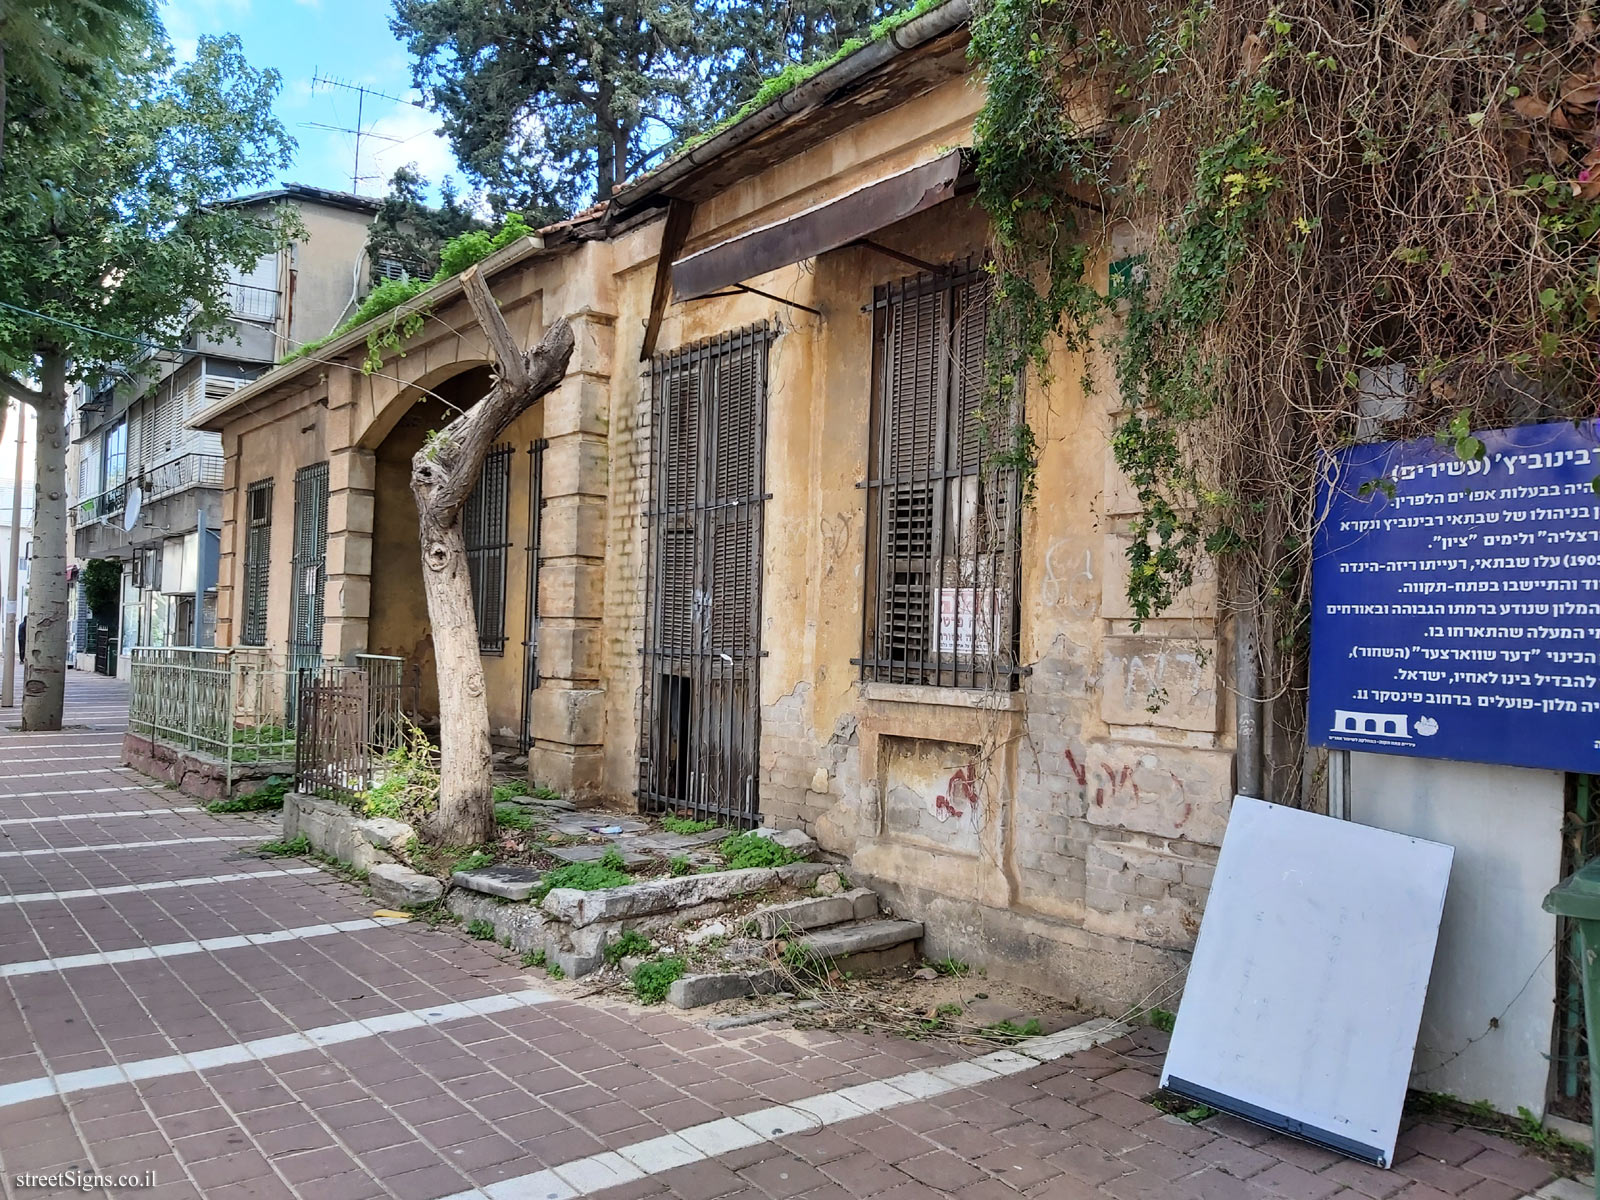 Historical Sites - Rabinovich Hotel (Rich) - Yehuda Leib Pinsker St 27, Petah Tikva, Israel